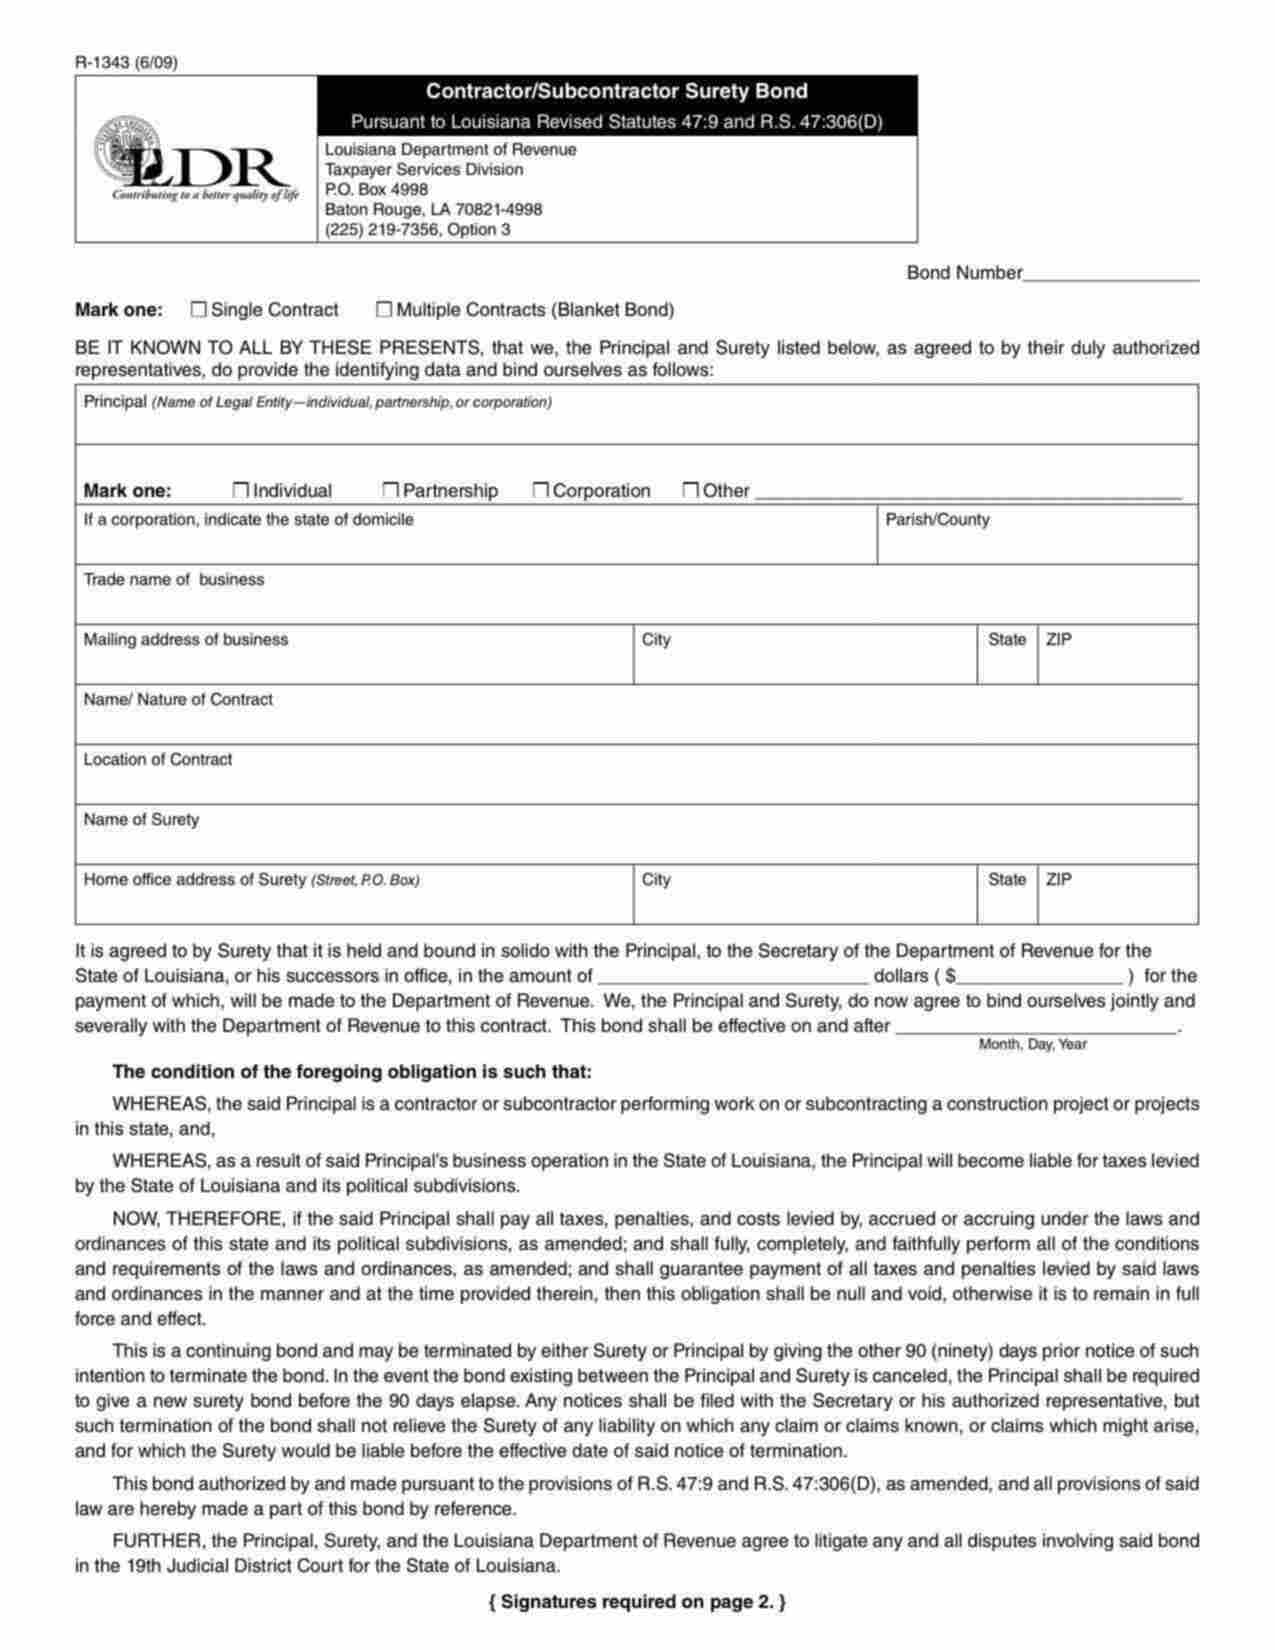 Louisiana Contractor/Subcontractor Tax - Single Contract Bond Form